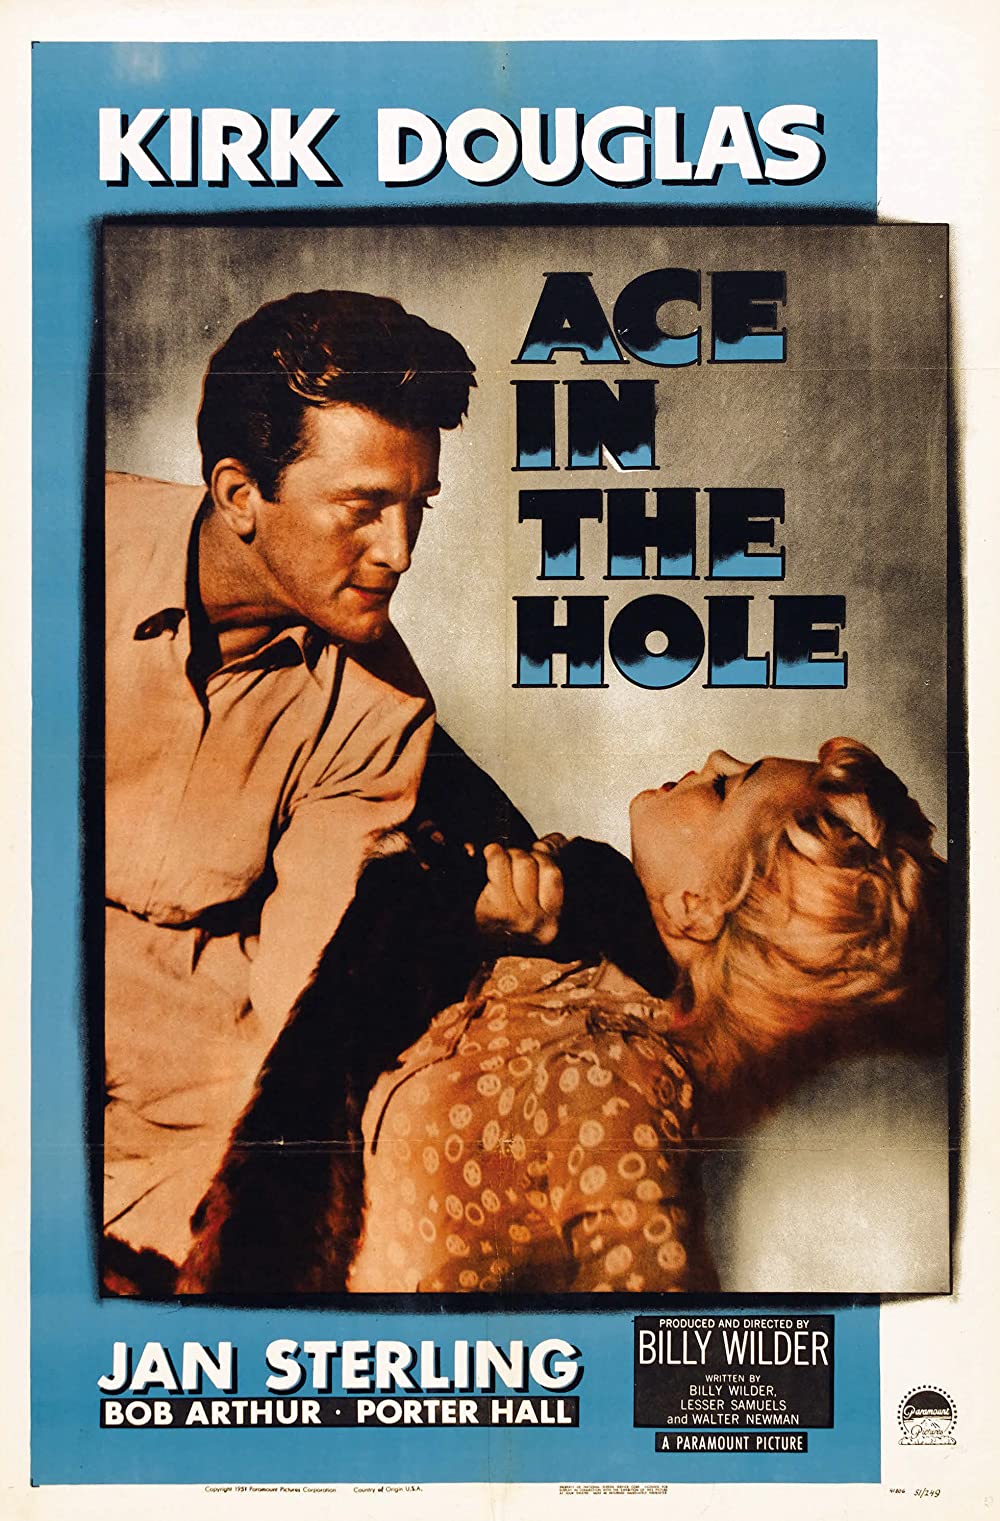 Filmbeschreibung zu Ace in the Hole